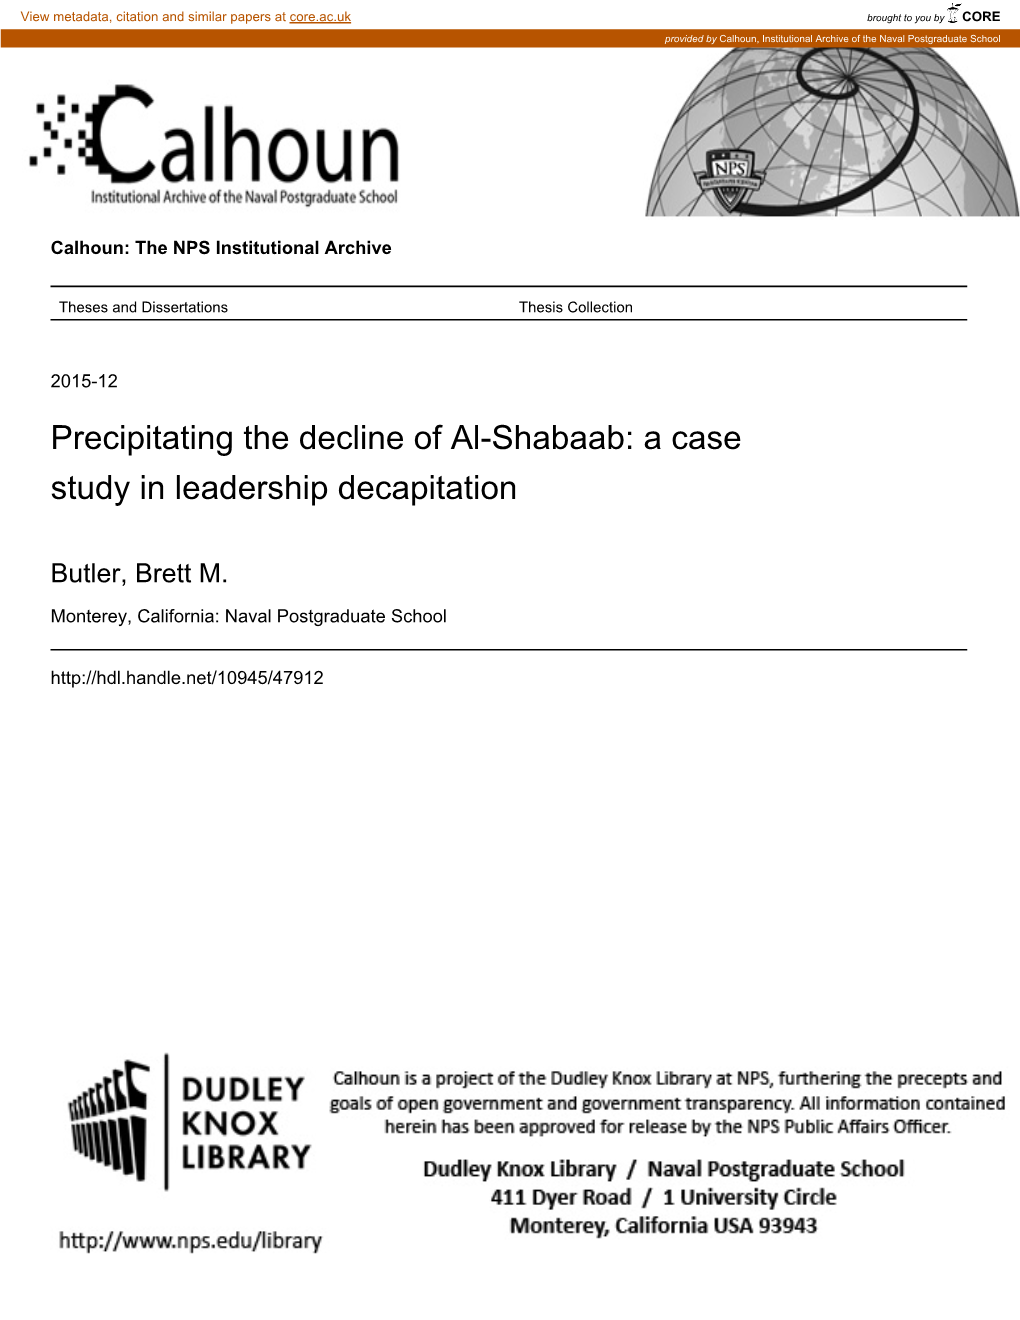 Precipitating the Decline of Al-Shabaab: a Case Study in Leadership Decapitation